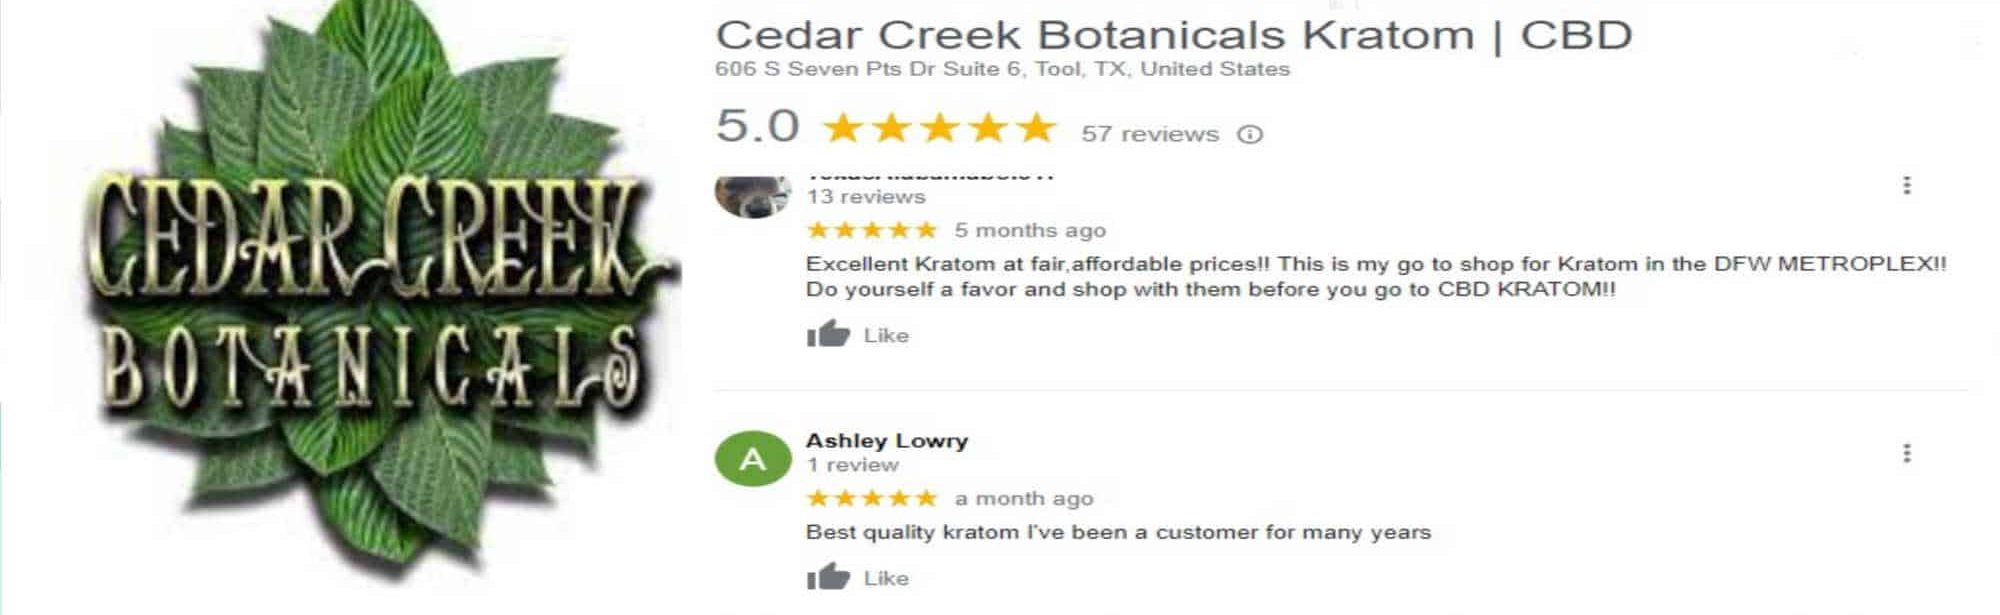 image of cedar creek botanicals customer reviews